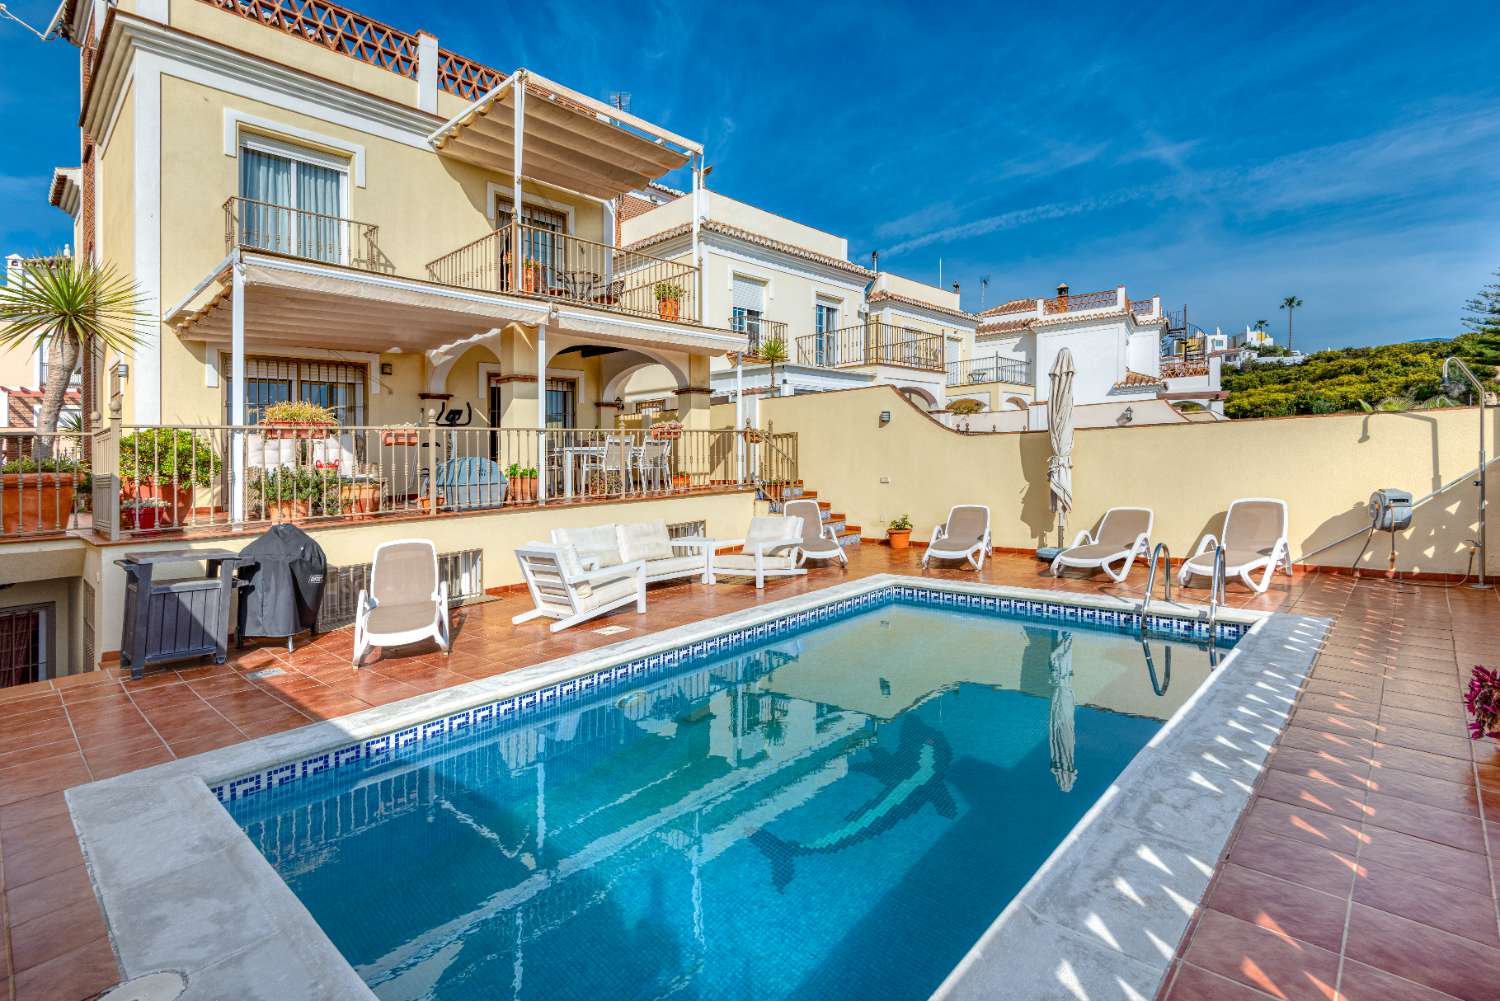 Detached villa with private pool for sale in Punta Lara, Nerja